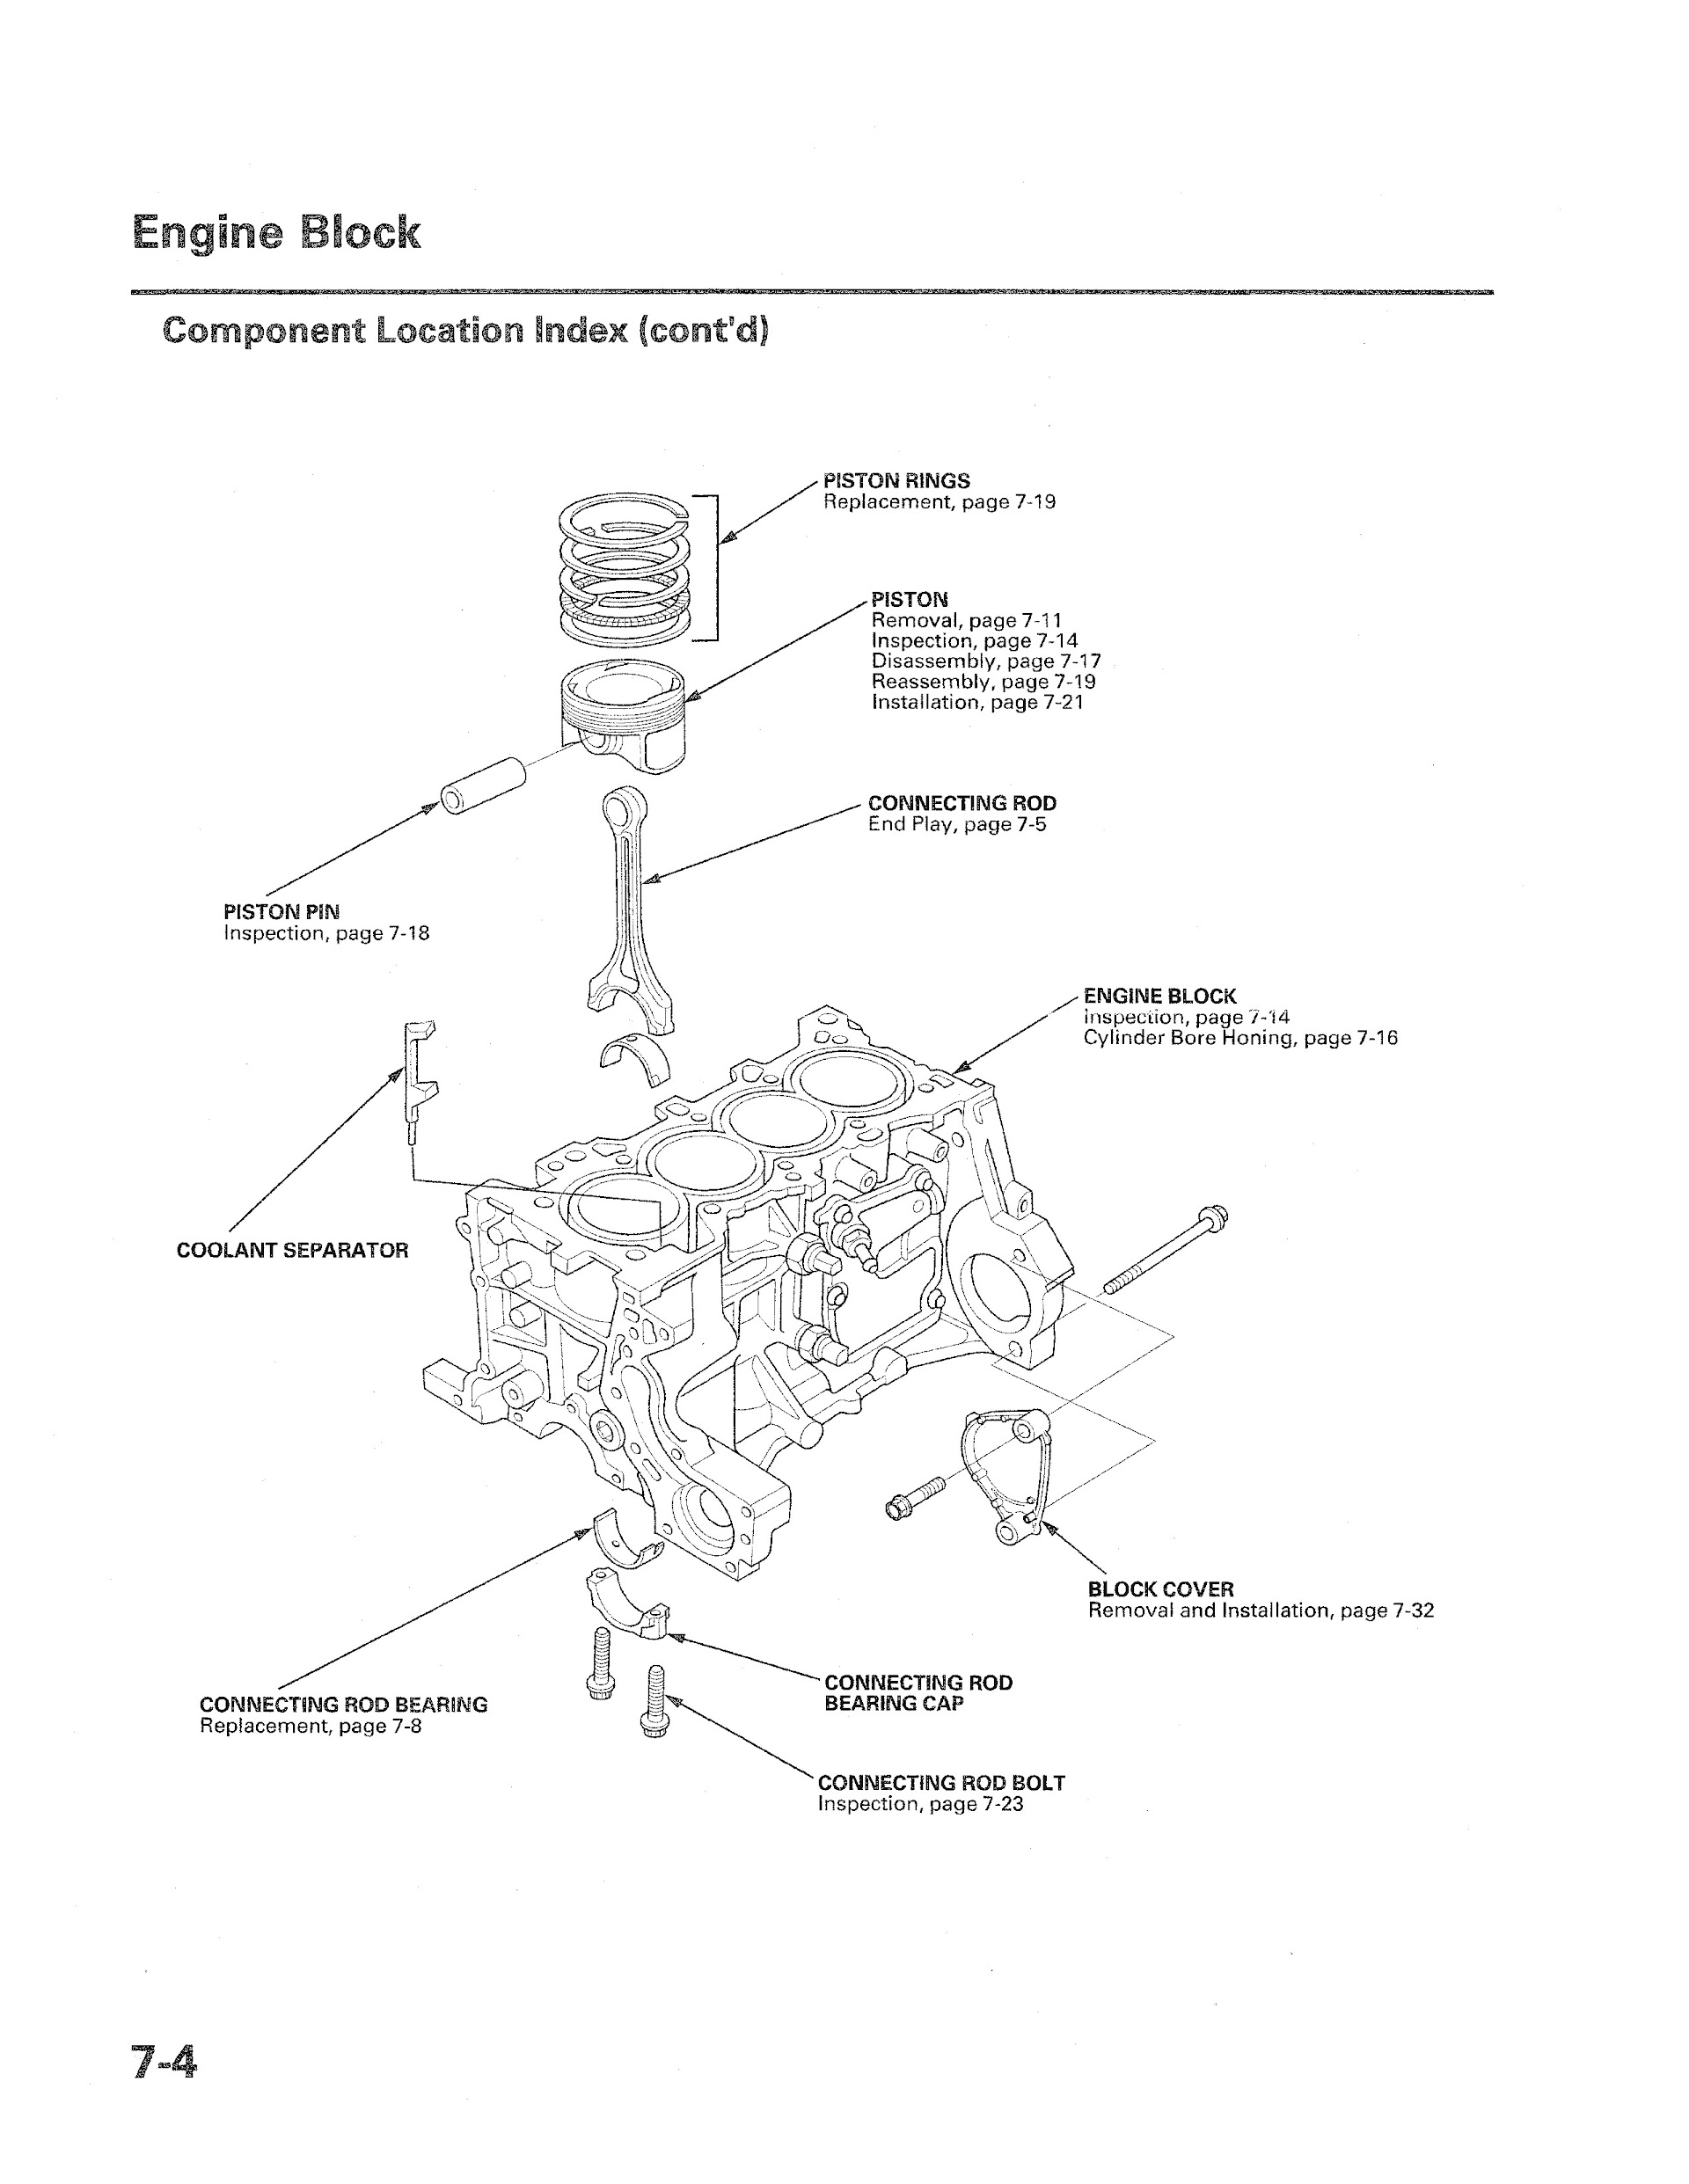 2010-2012 Honda CR-Z Repair Manual, Engine Block Unit Removal and Installtion